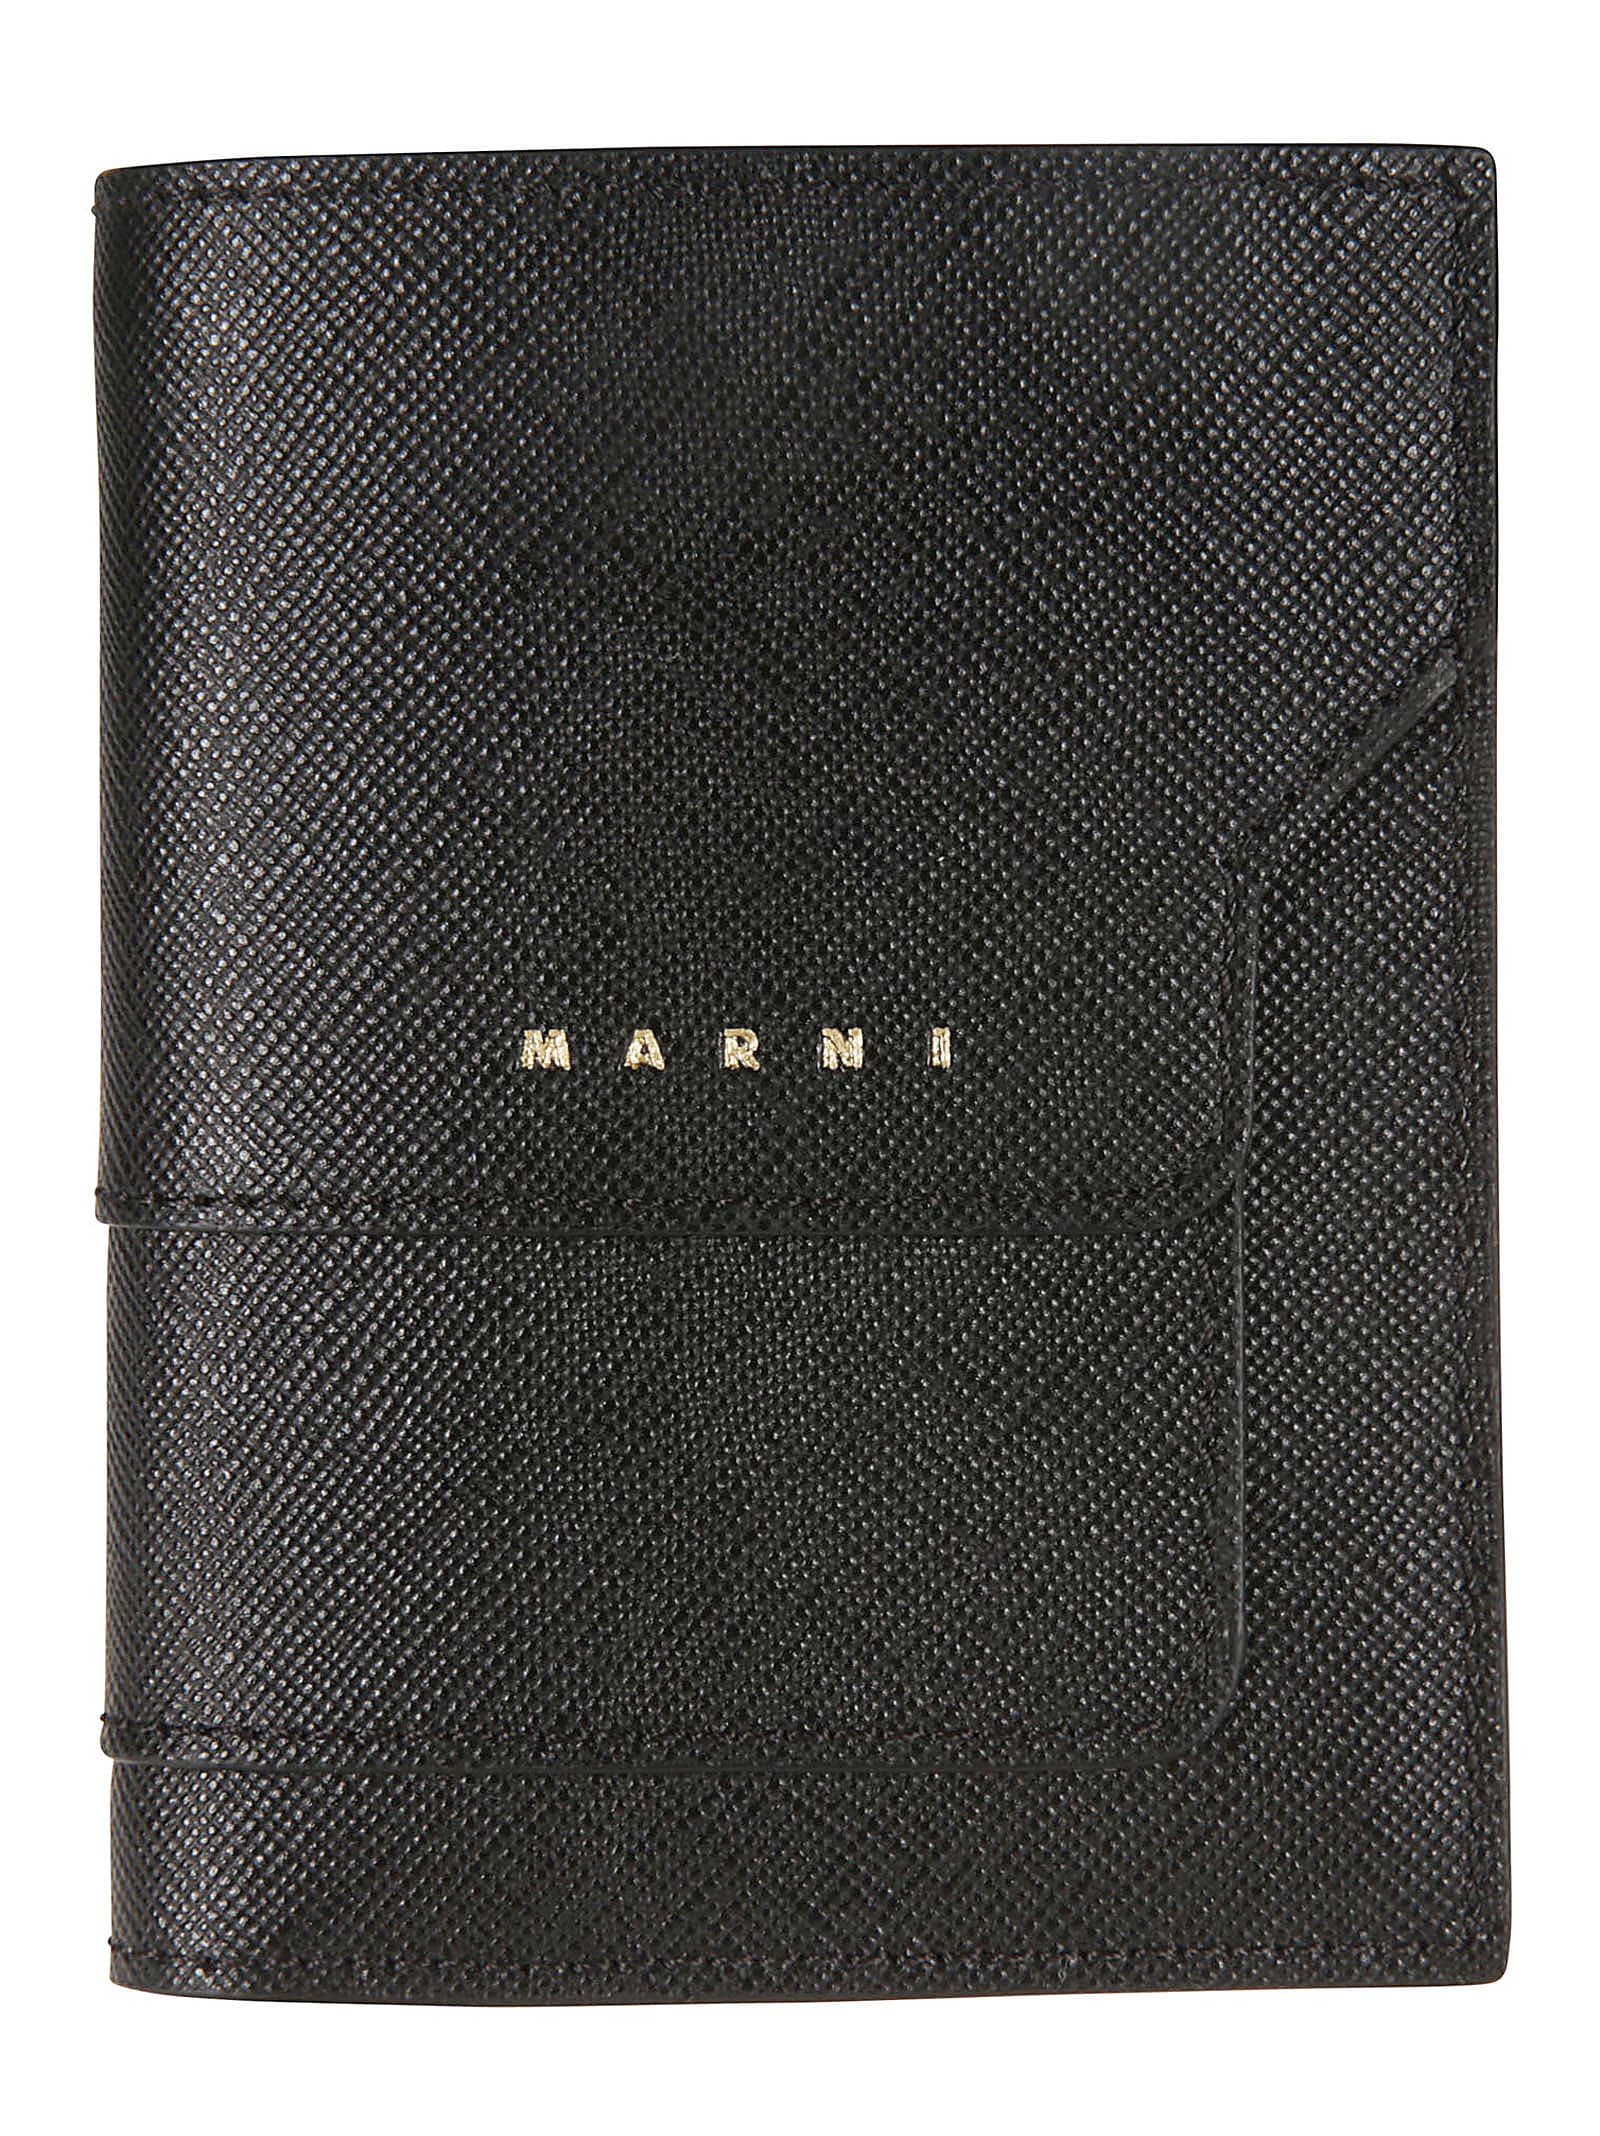 Marni Button-snap Wallet